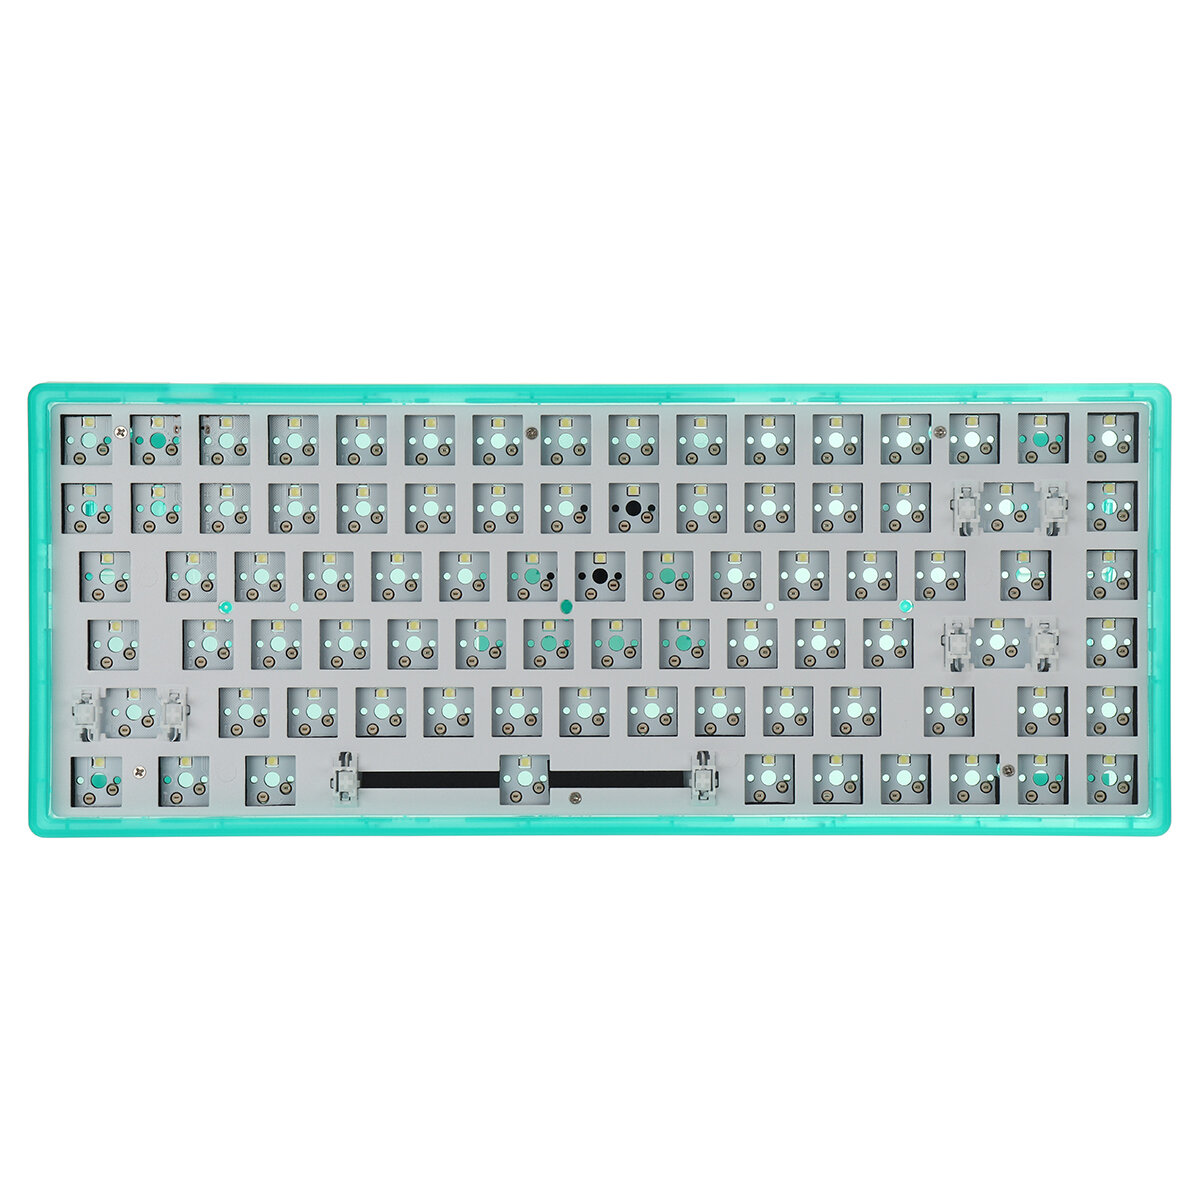 FEKER JJK84 Keyboard Customized Kit Emerald Green Transparant Triple Mode 84 Keys 750mAh Hot Swappable Keyboard Kit